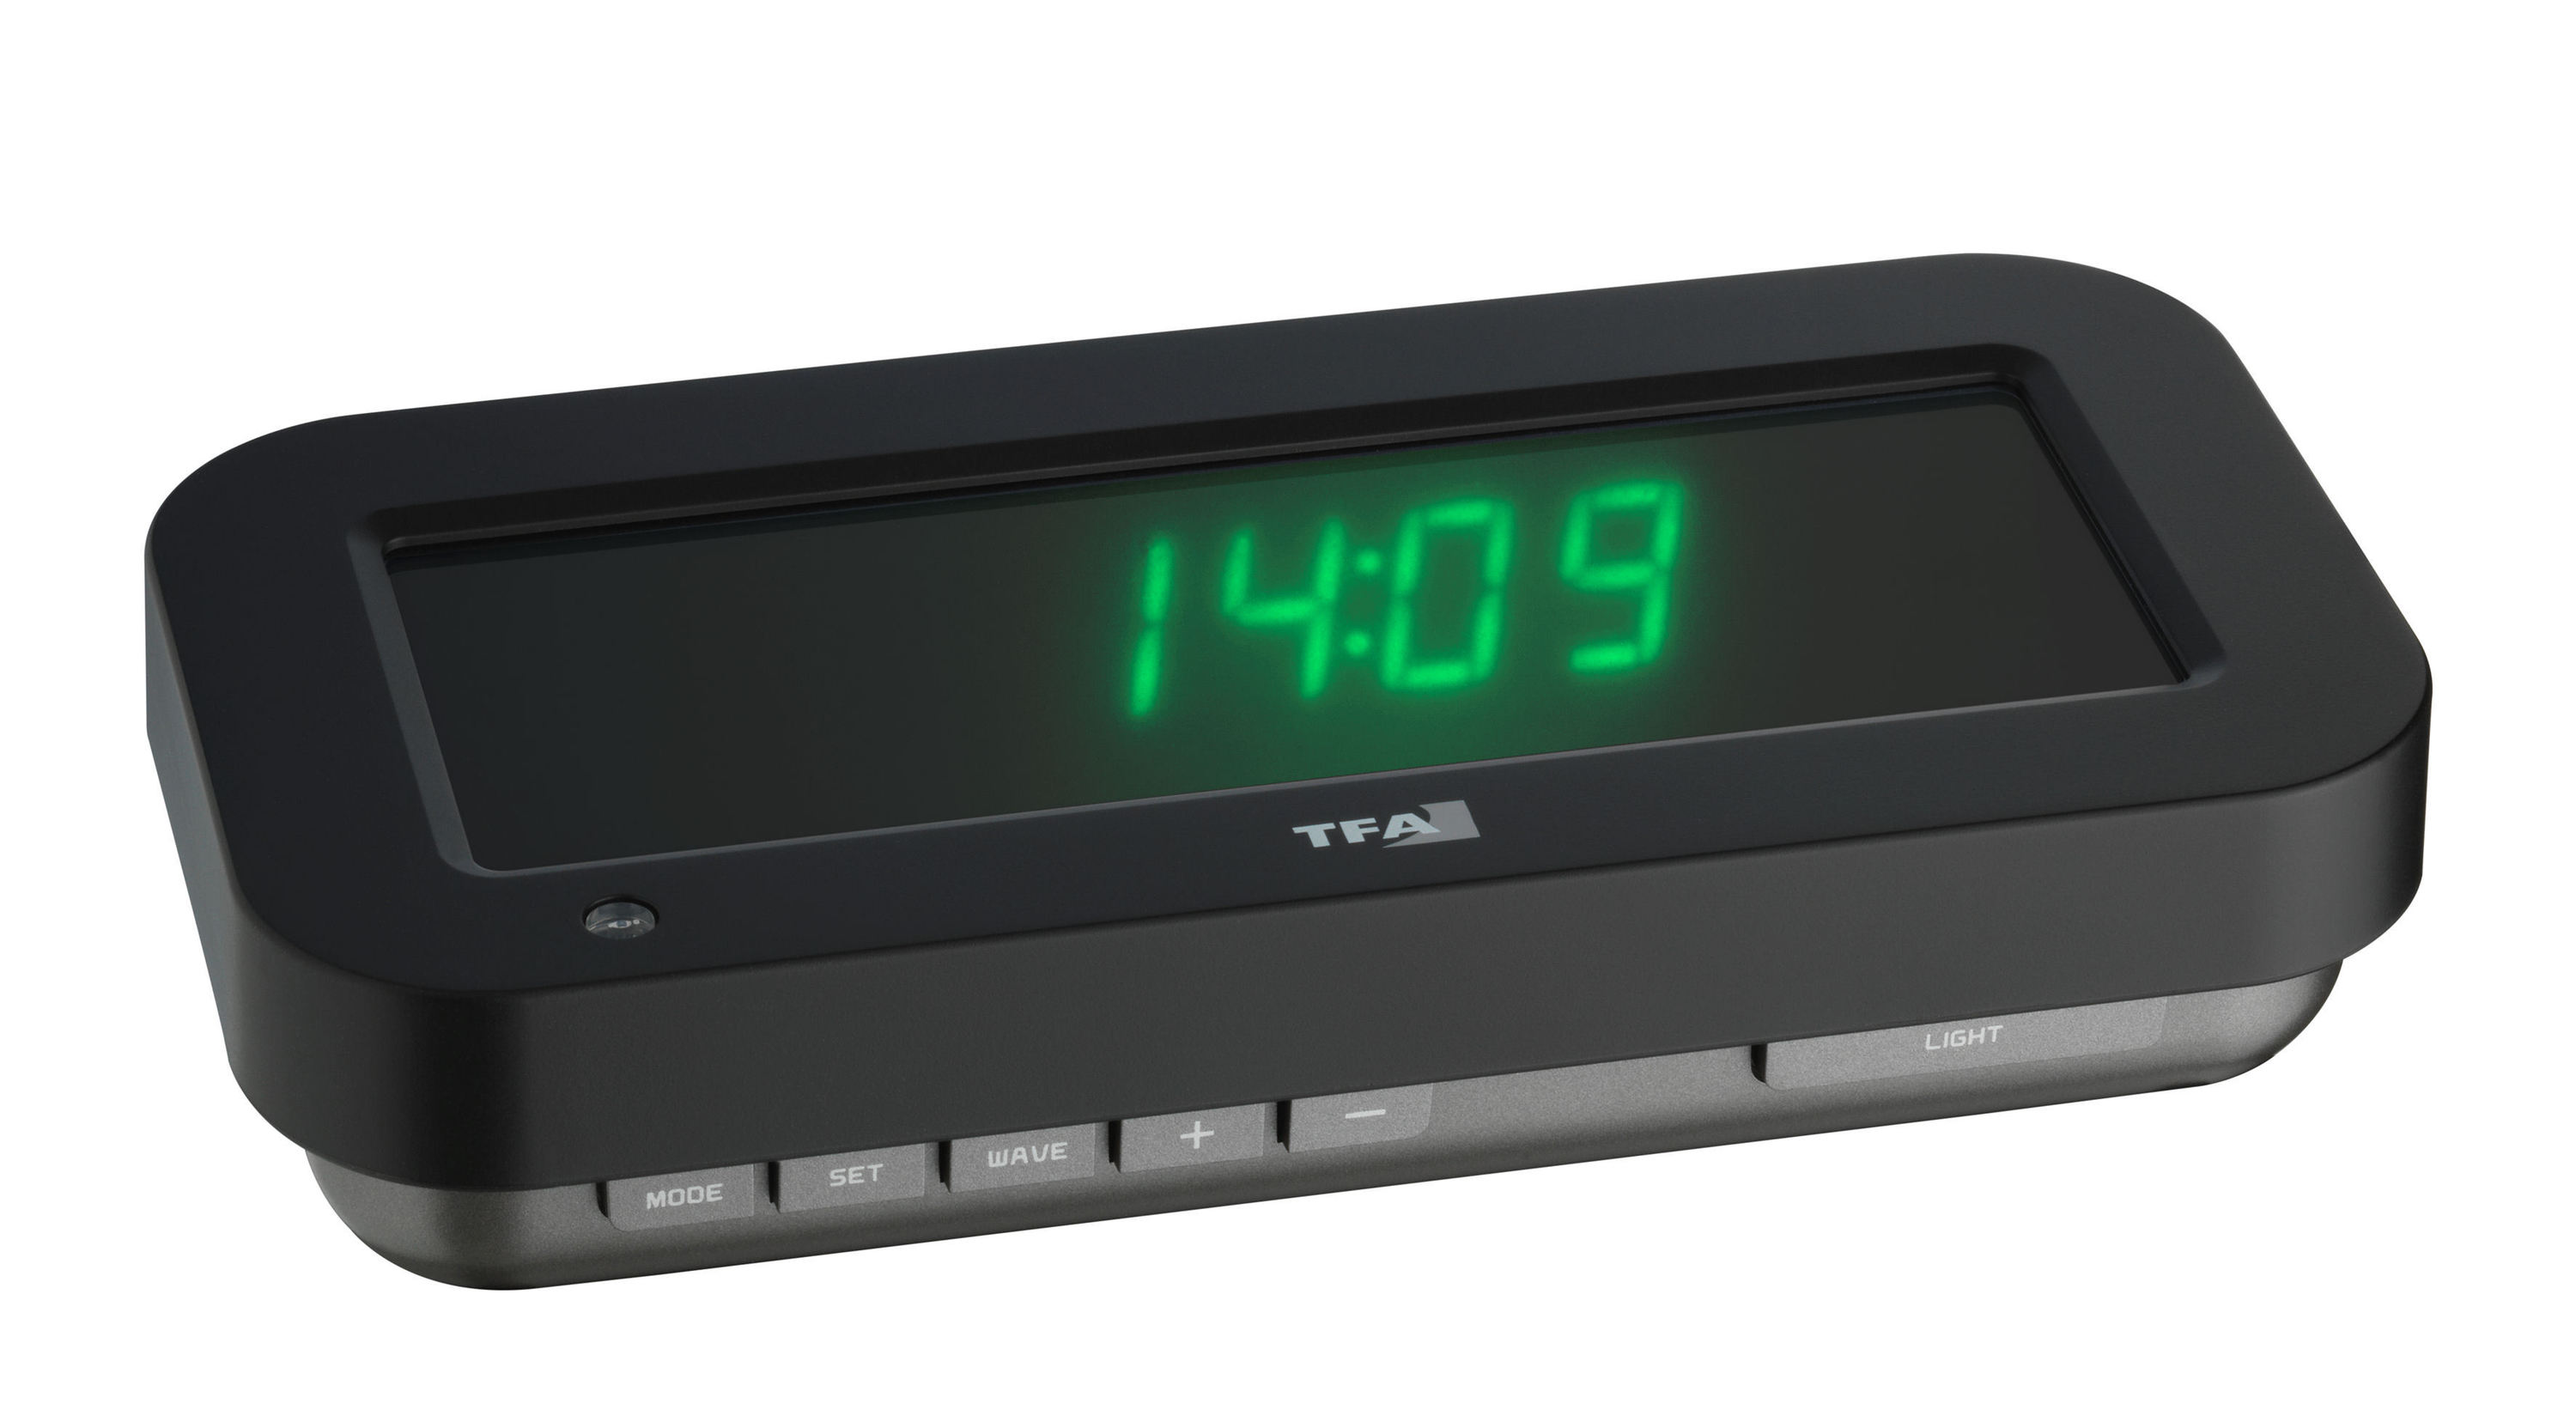 Radio Controlled Living Room Digital Clock